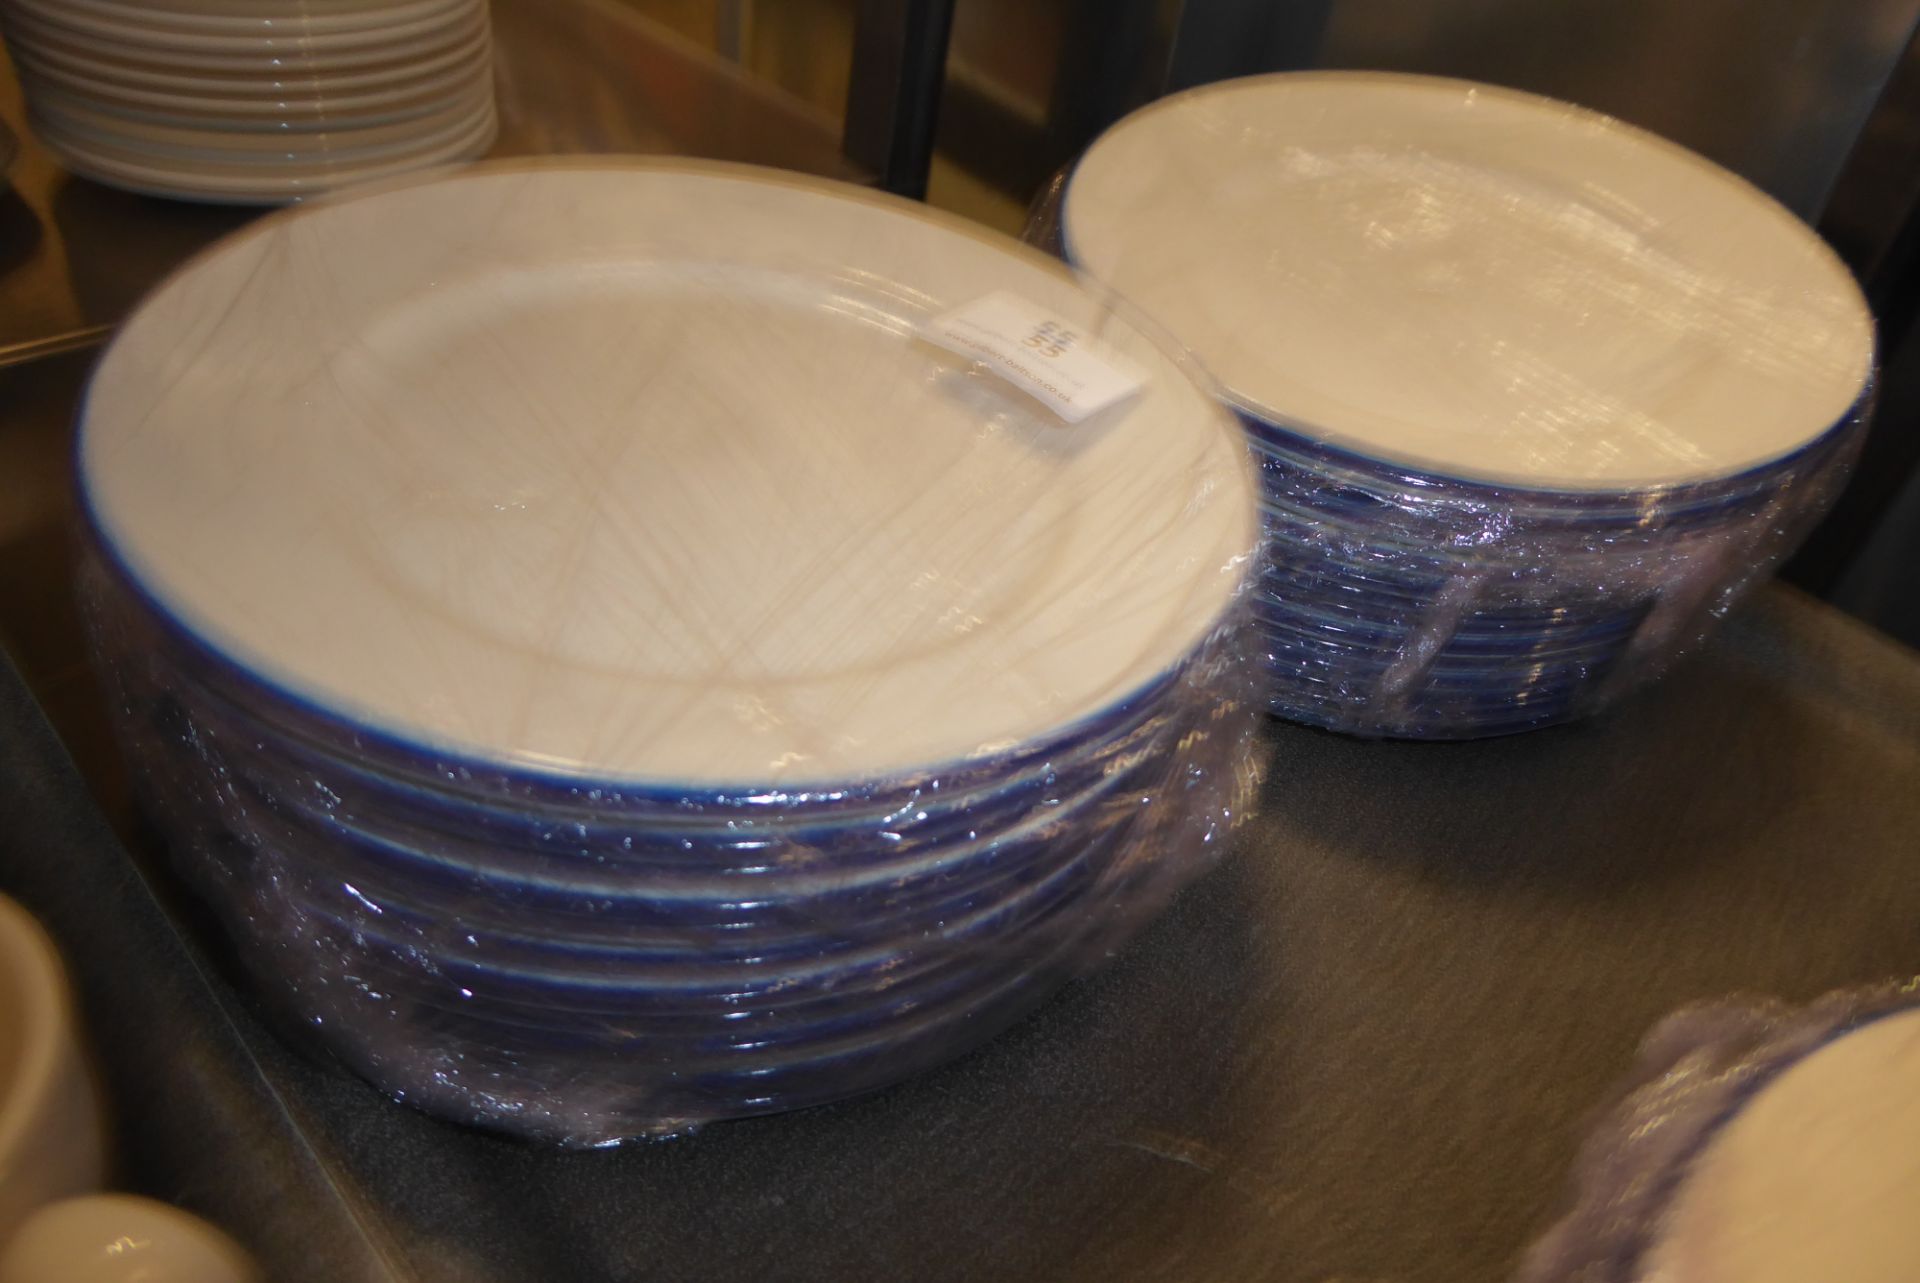 * 24 x 18cm white plates with blue rim